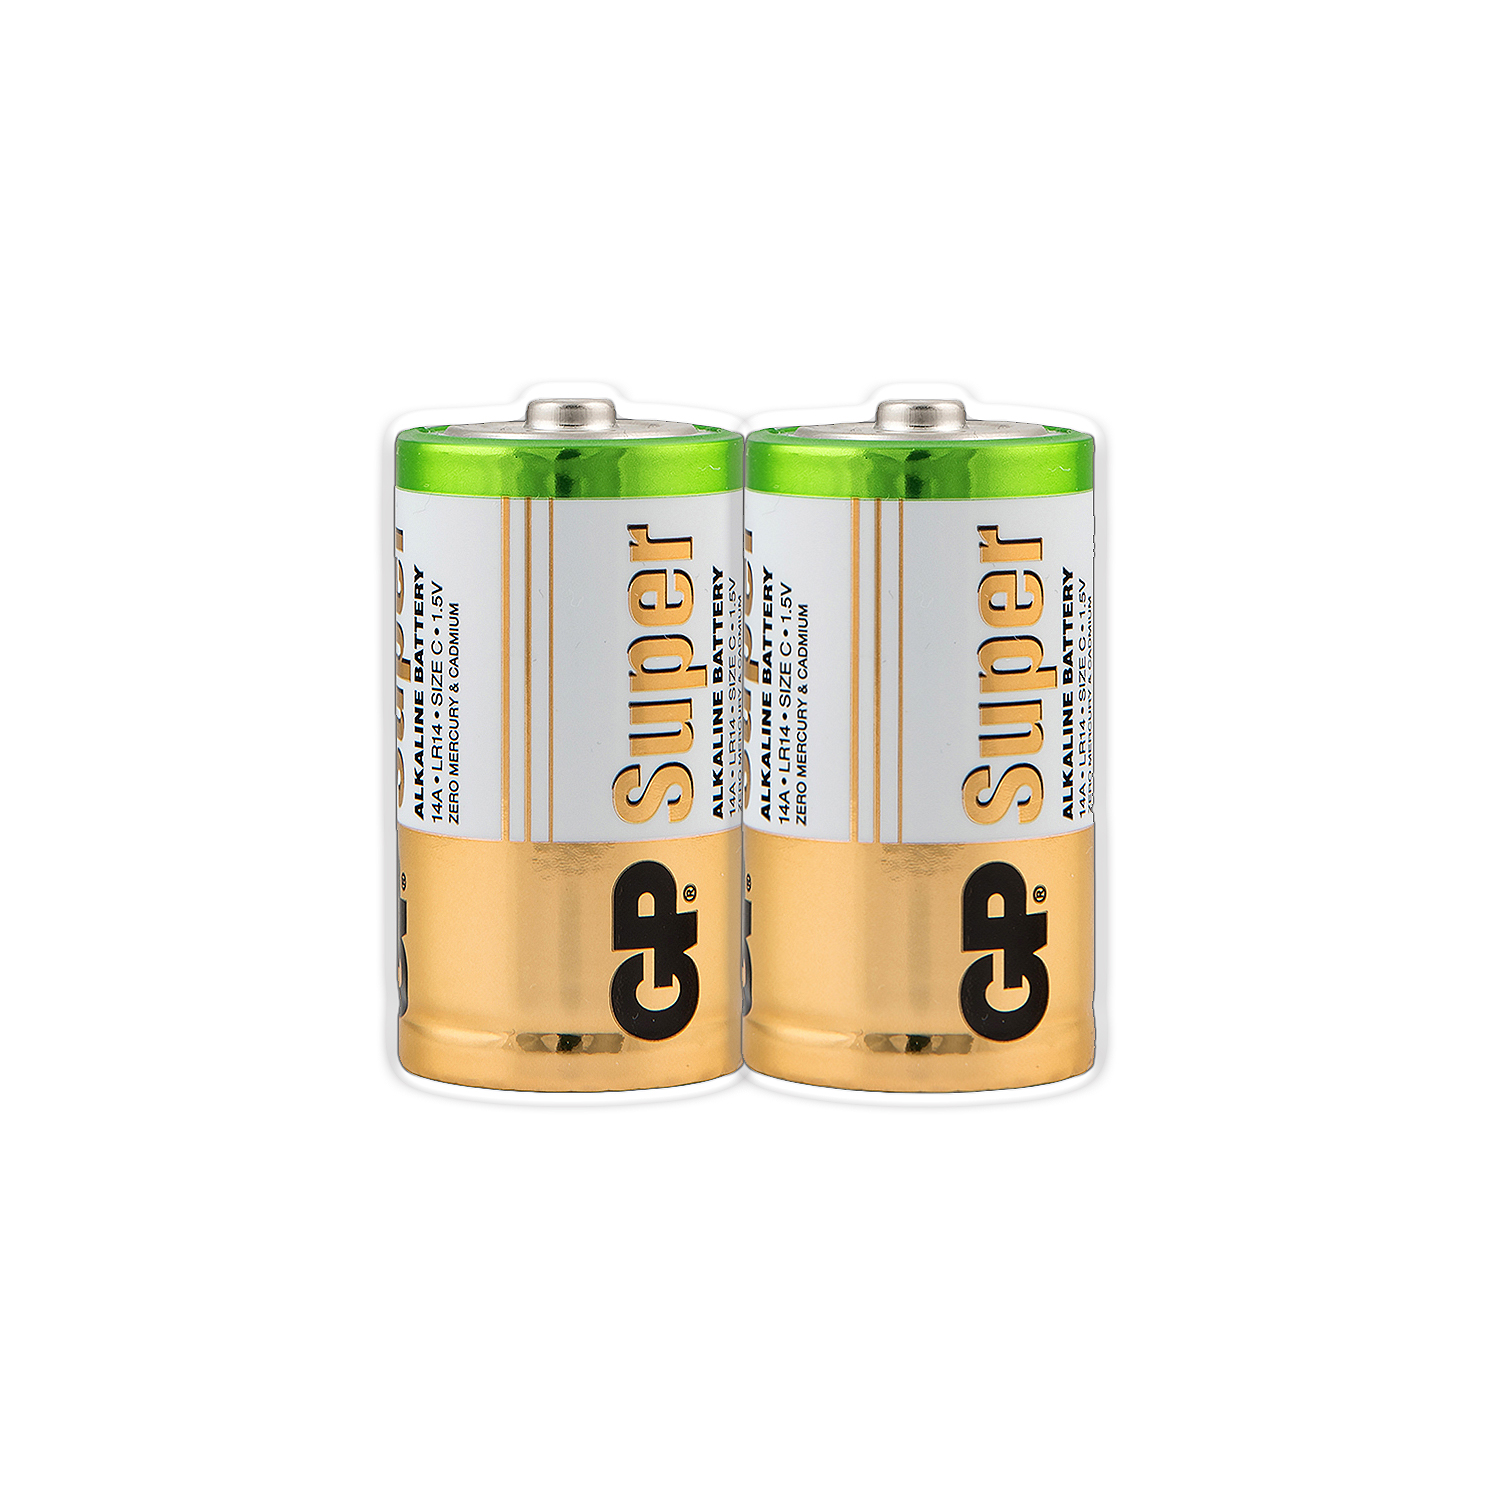 Батарейка GP Super LR14 C Shrink 2 Alkaline 1.5V (2/24/240)